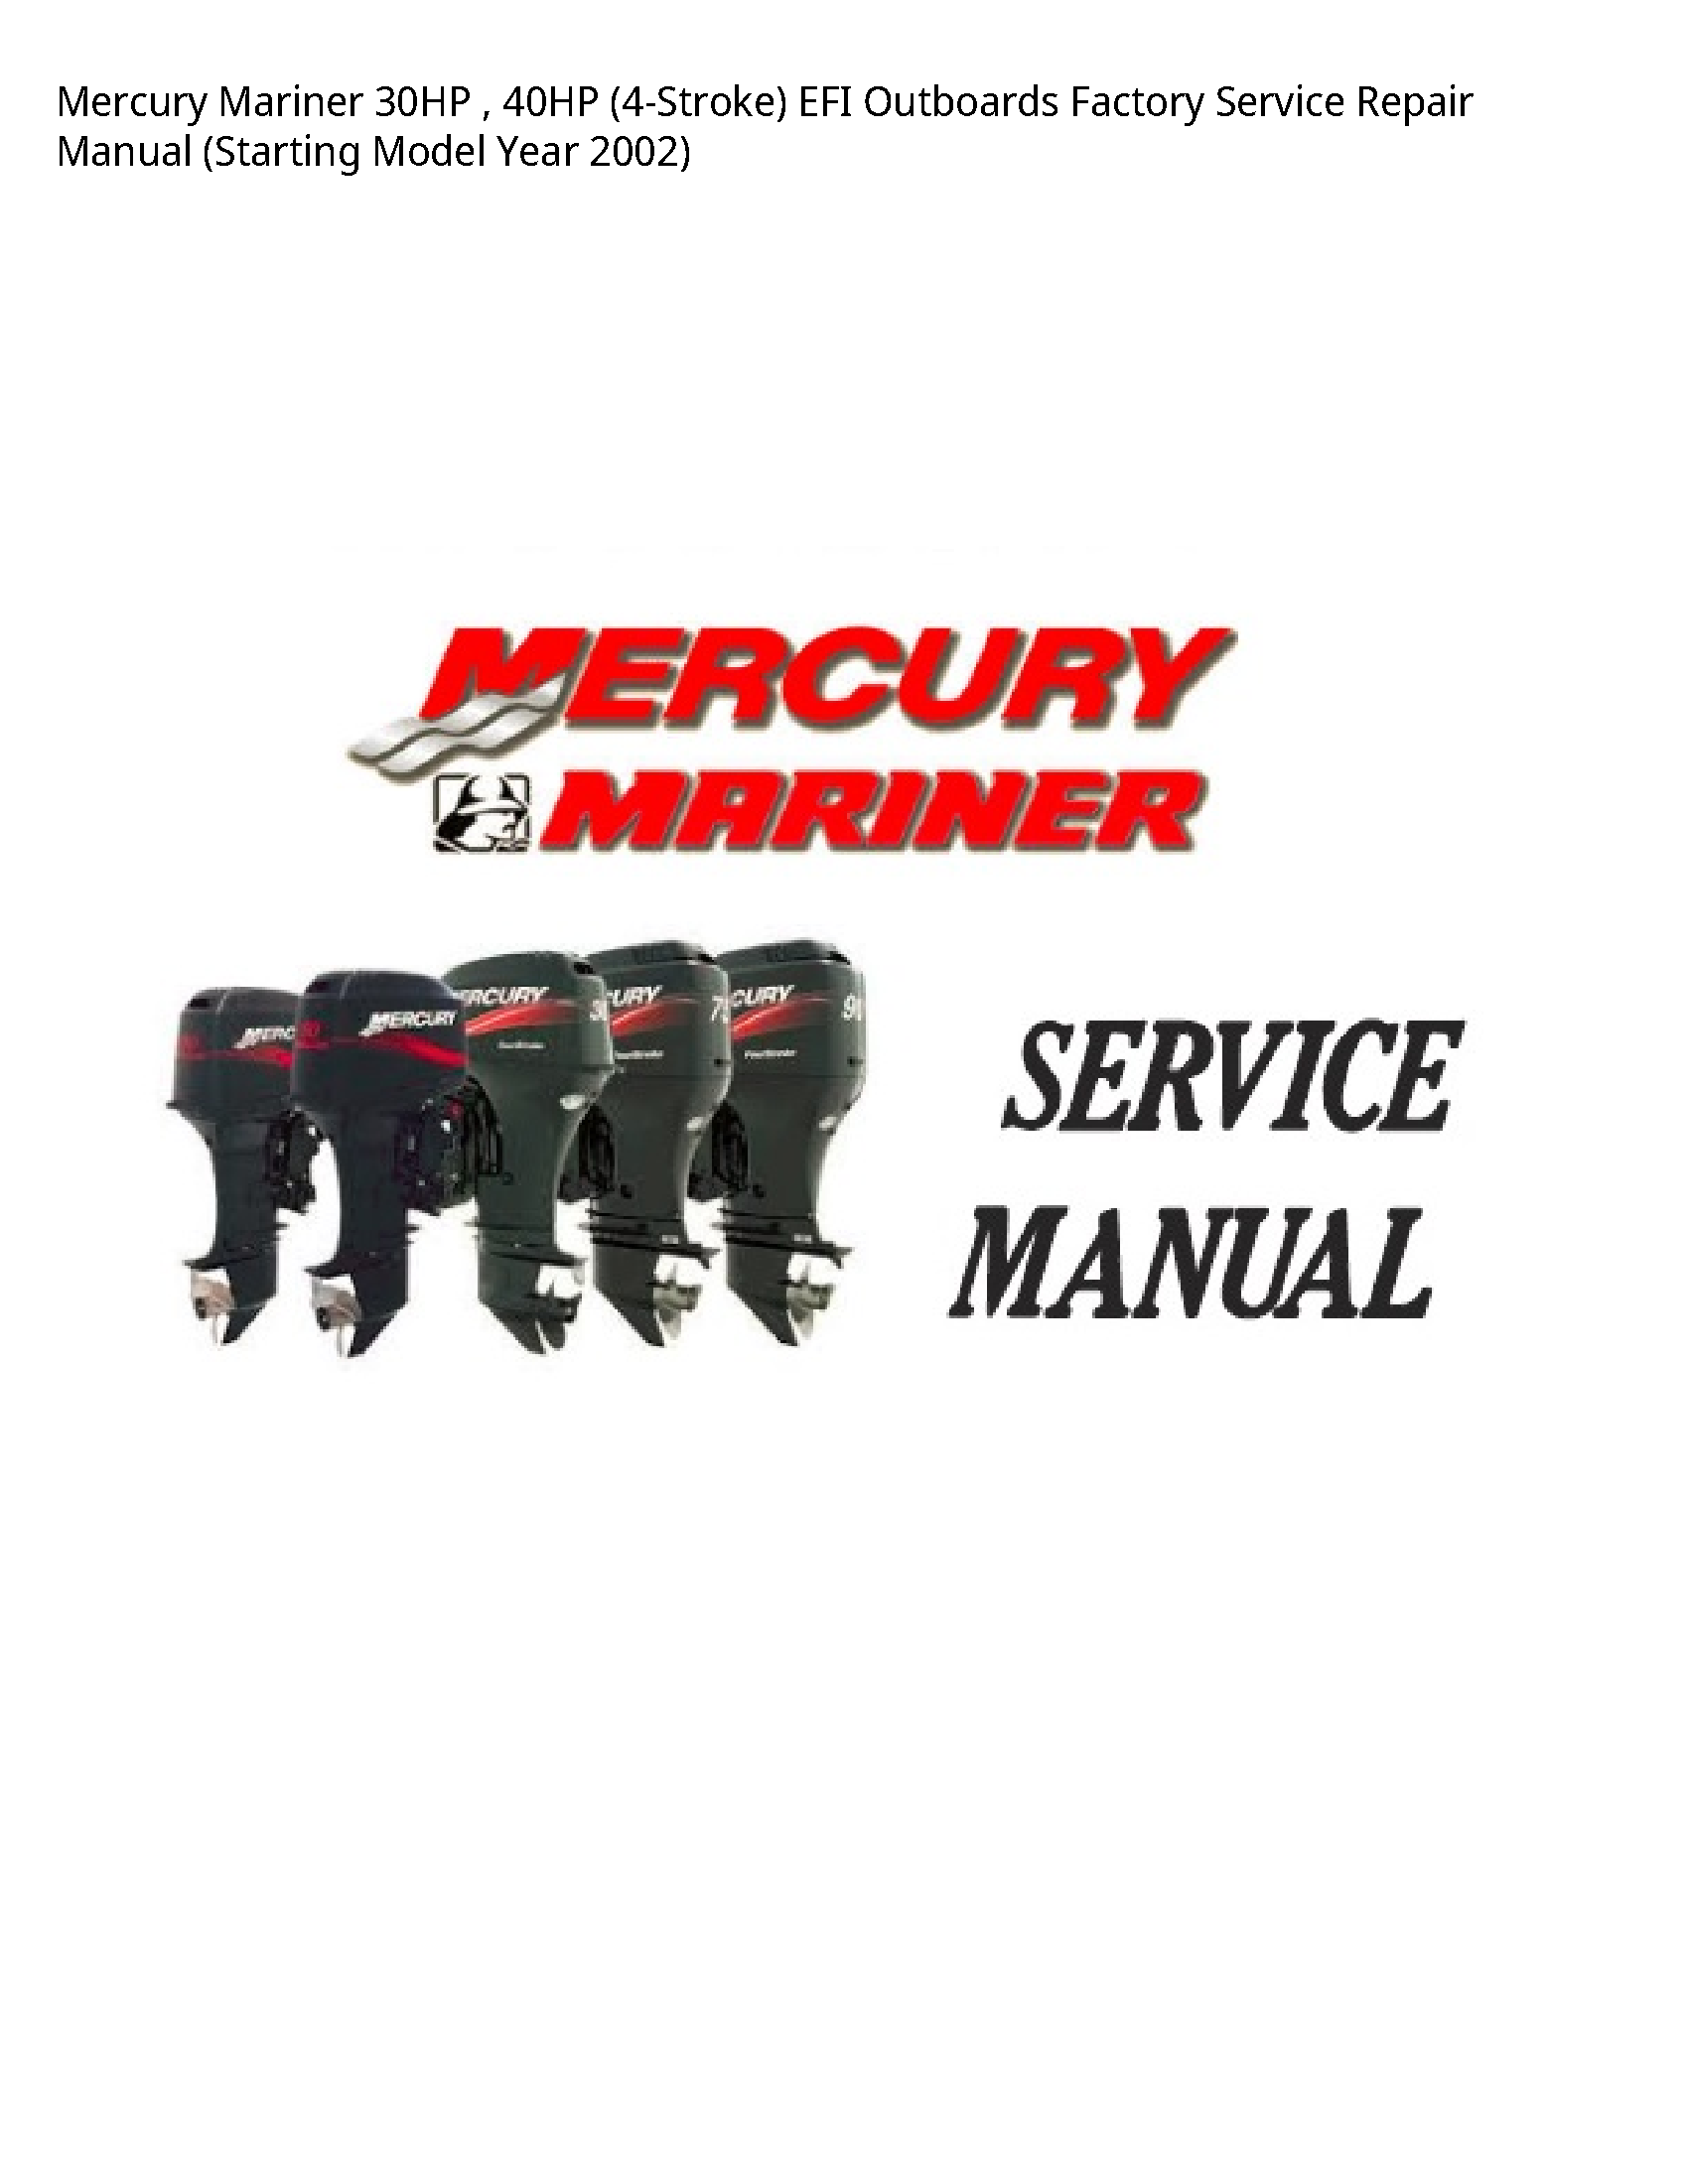 Mercury Mariner 30HP EFI Outboards Factory manual